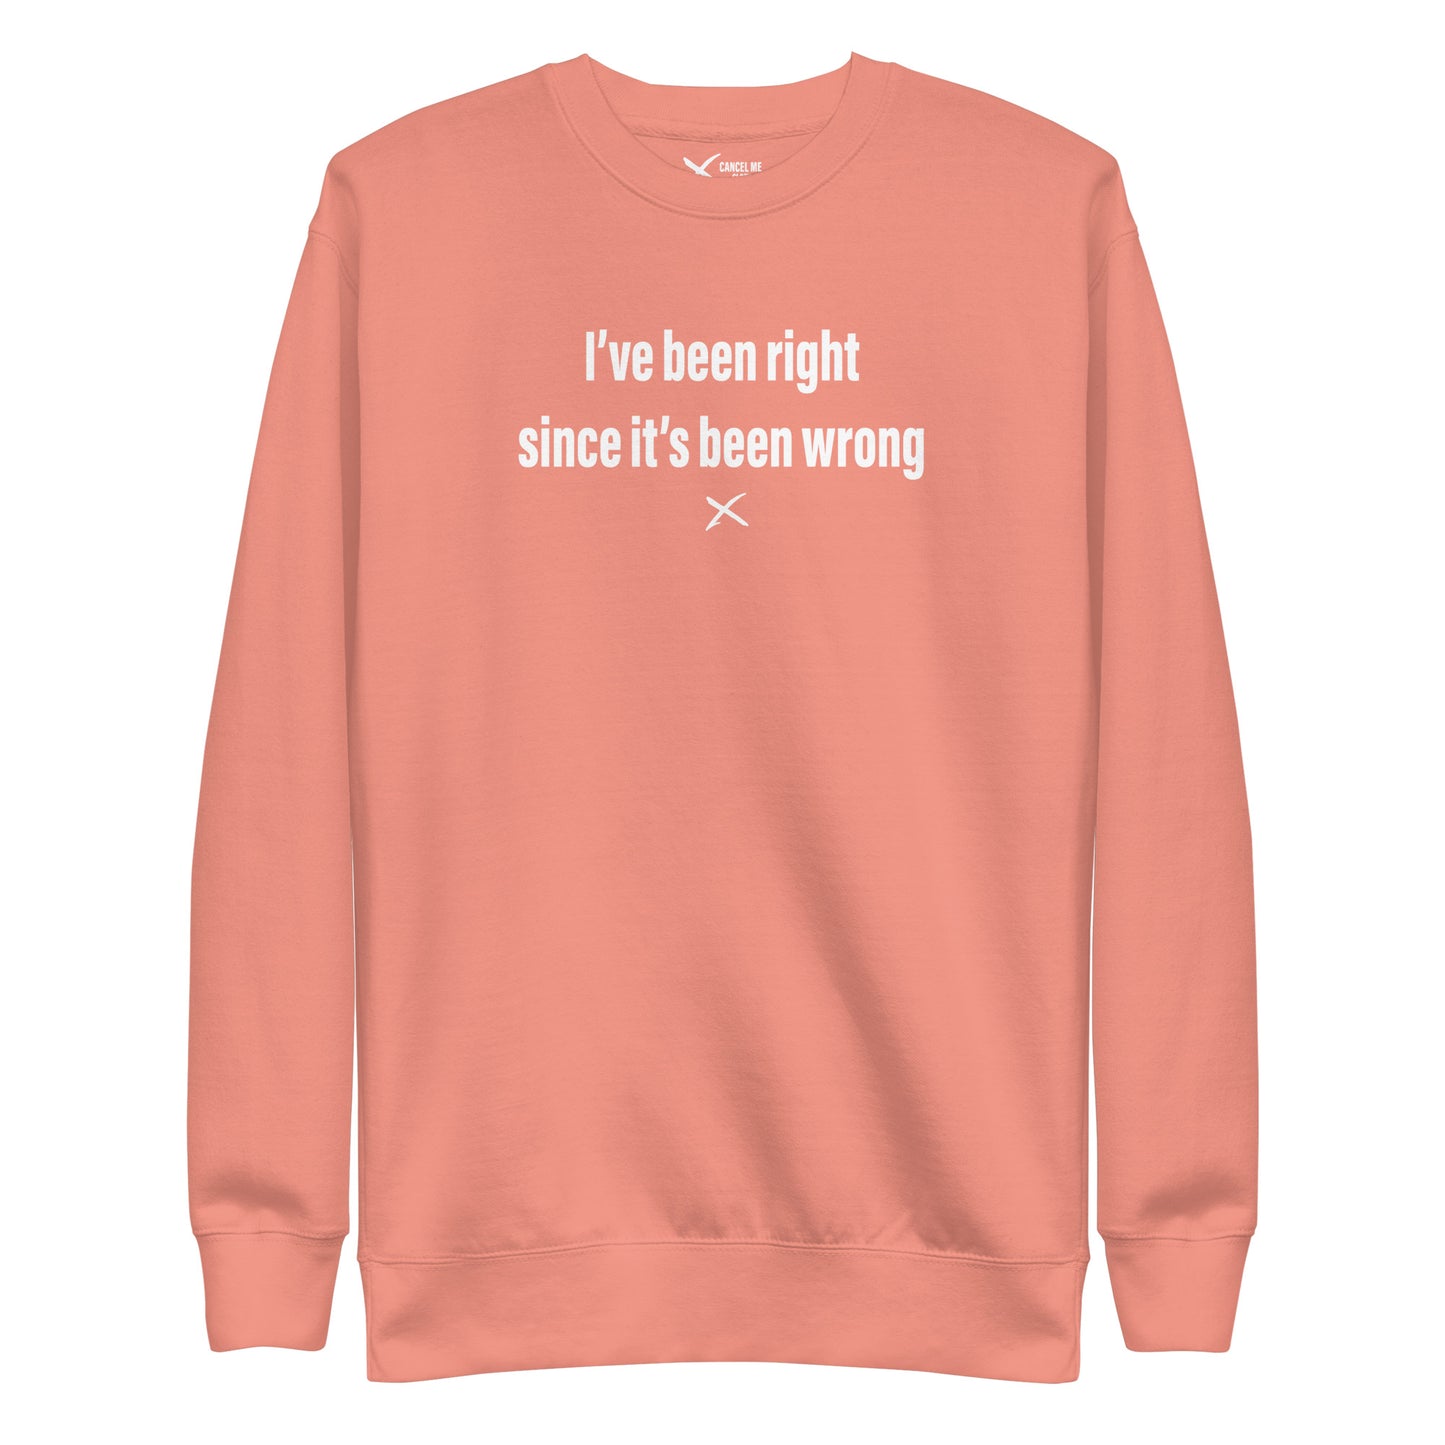 I've been right since it's been wrong - Sweatshirt